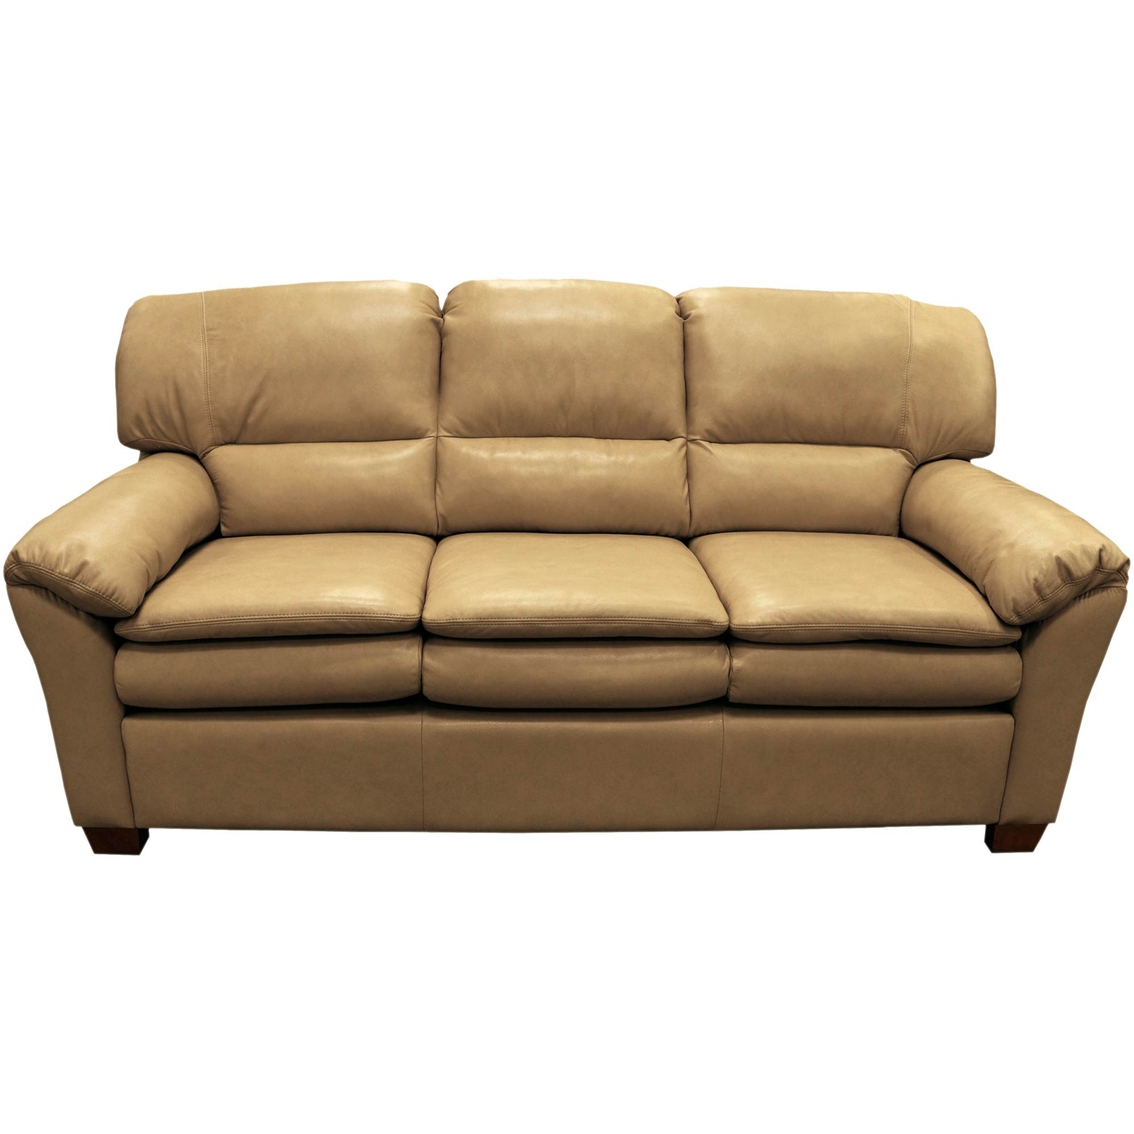 Omnia Leather Vegas Sofa Sofas, Omnia Leather Couch